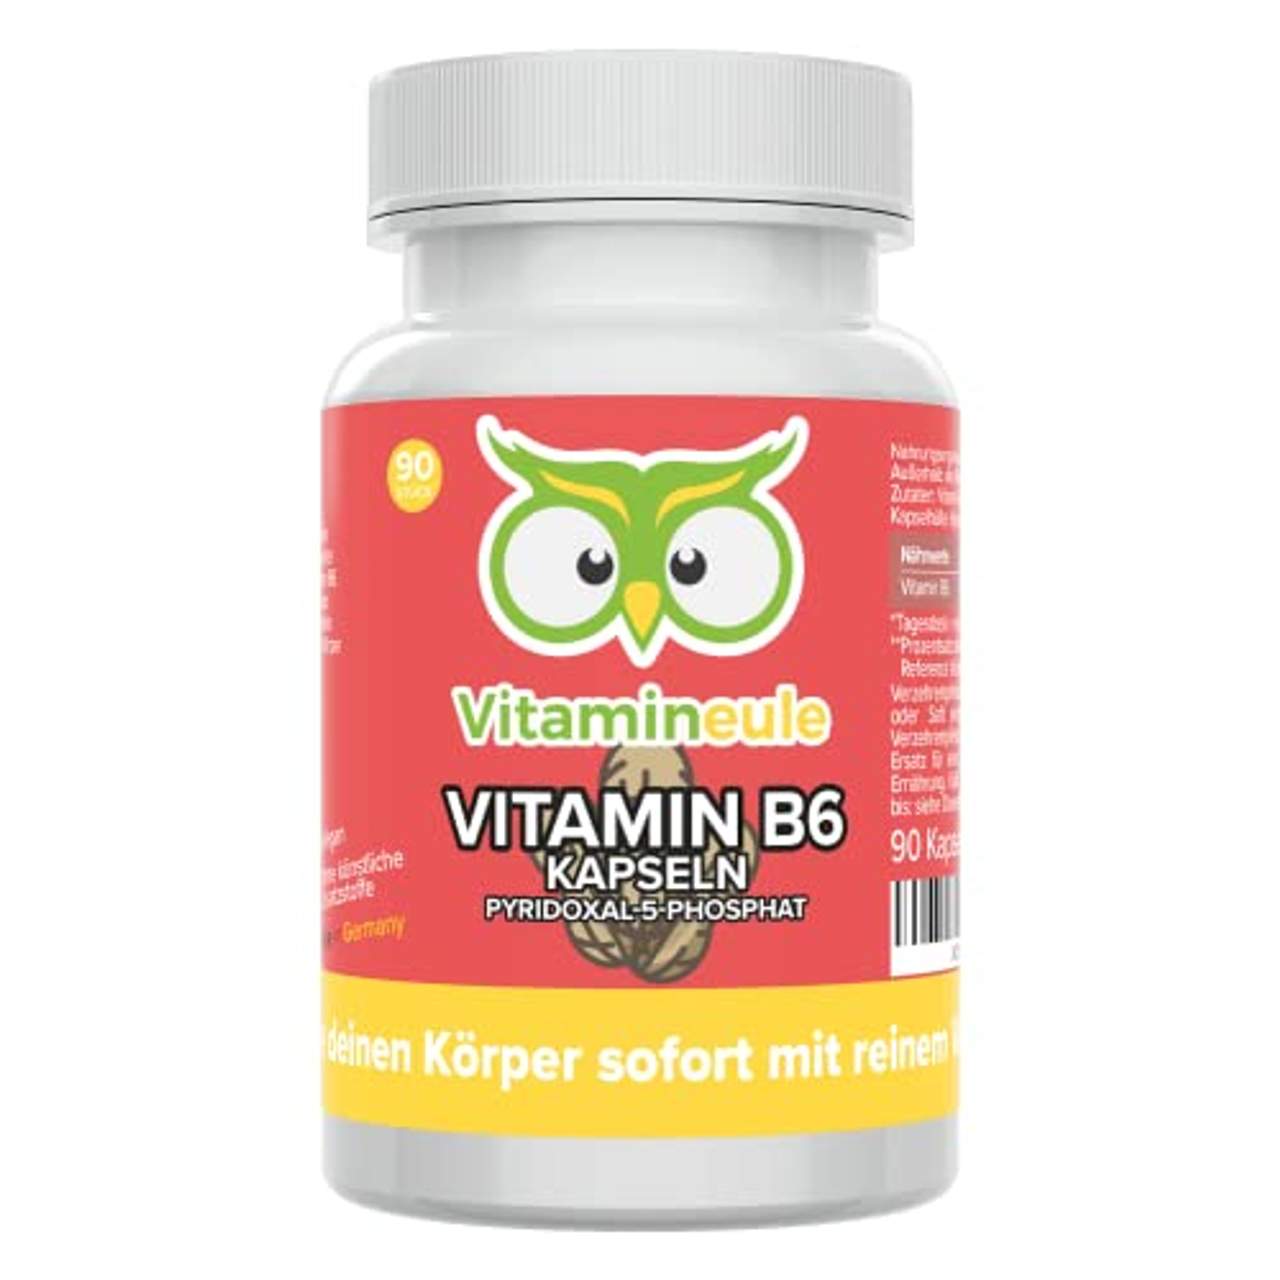 Vitamineule Vitamin B6 Kapseln